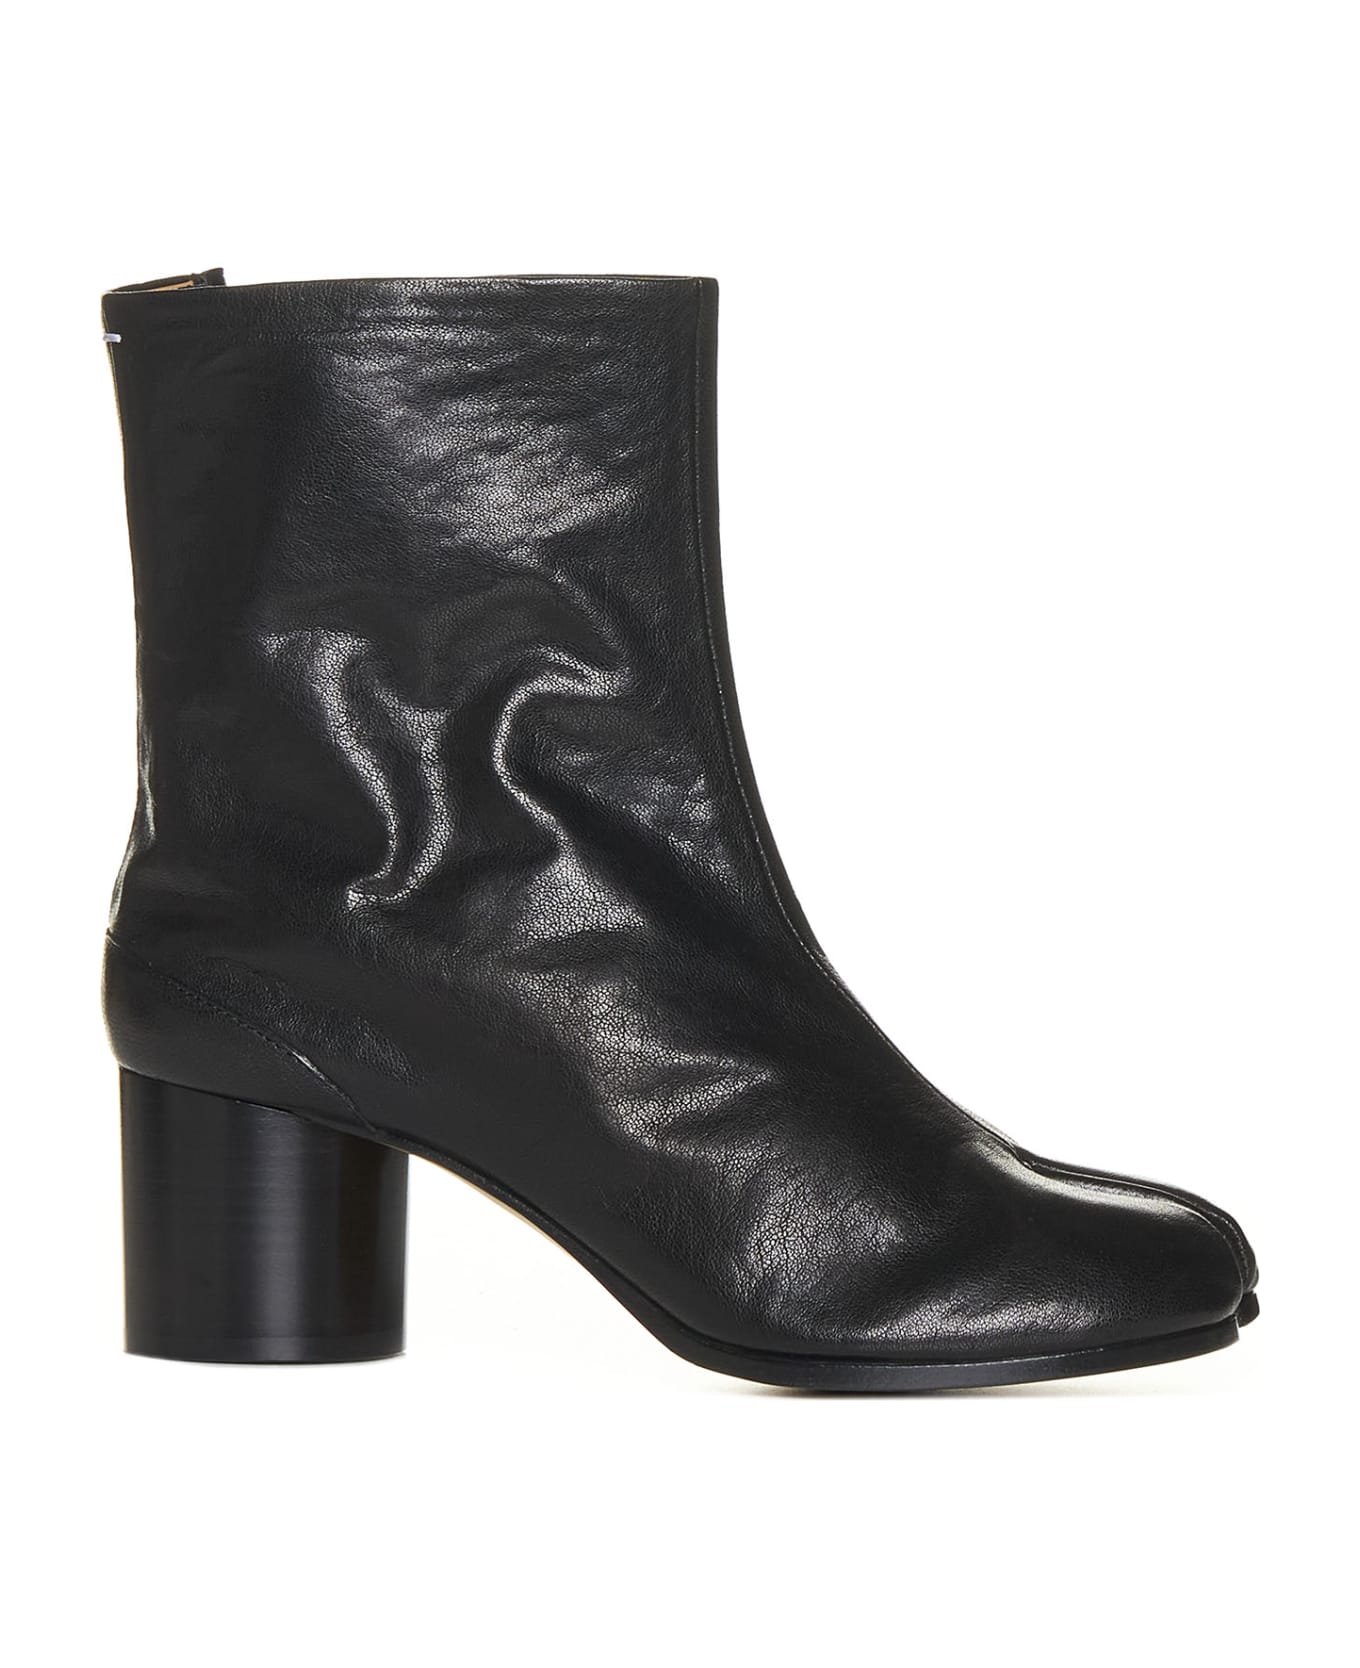 Maison Margiela Tabi Leather Ankle Boots - Black ブーツ